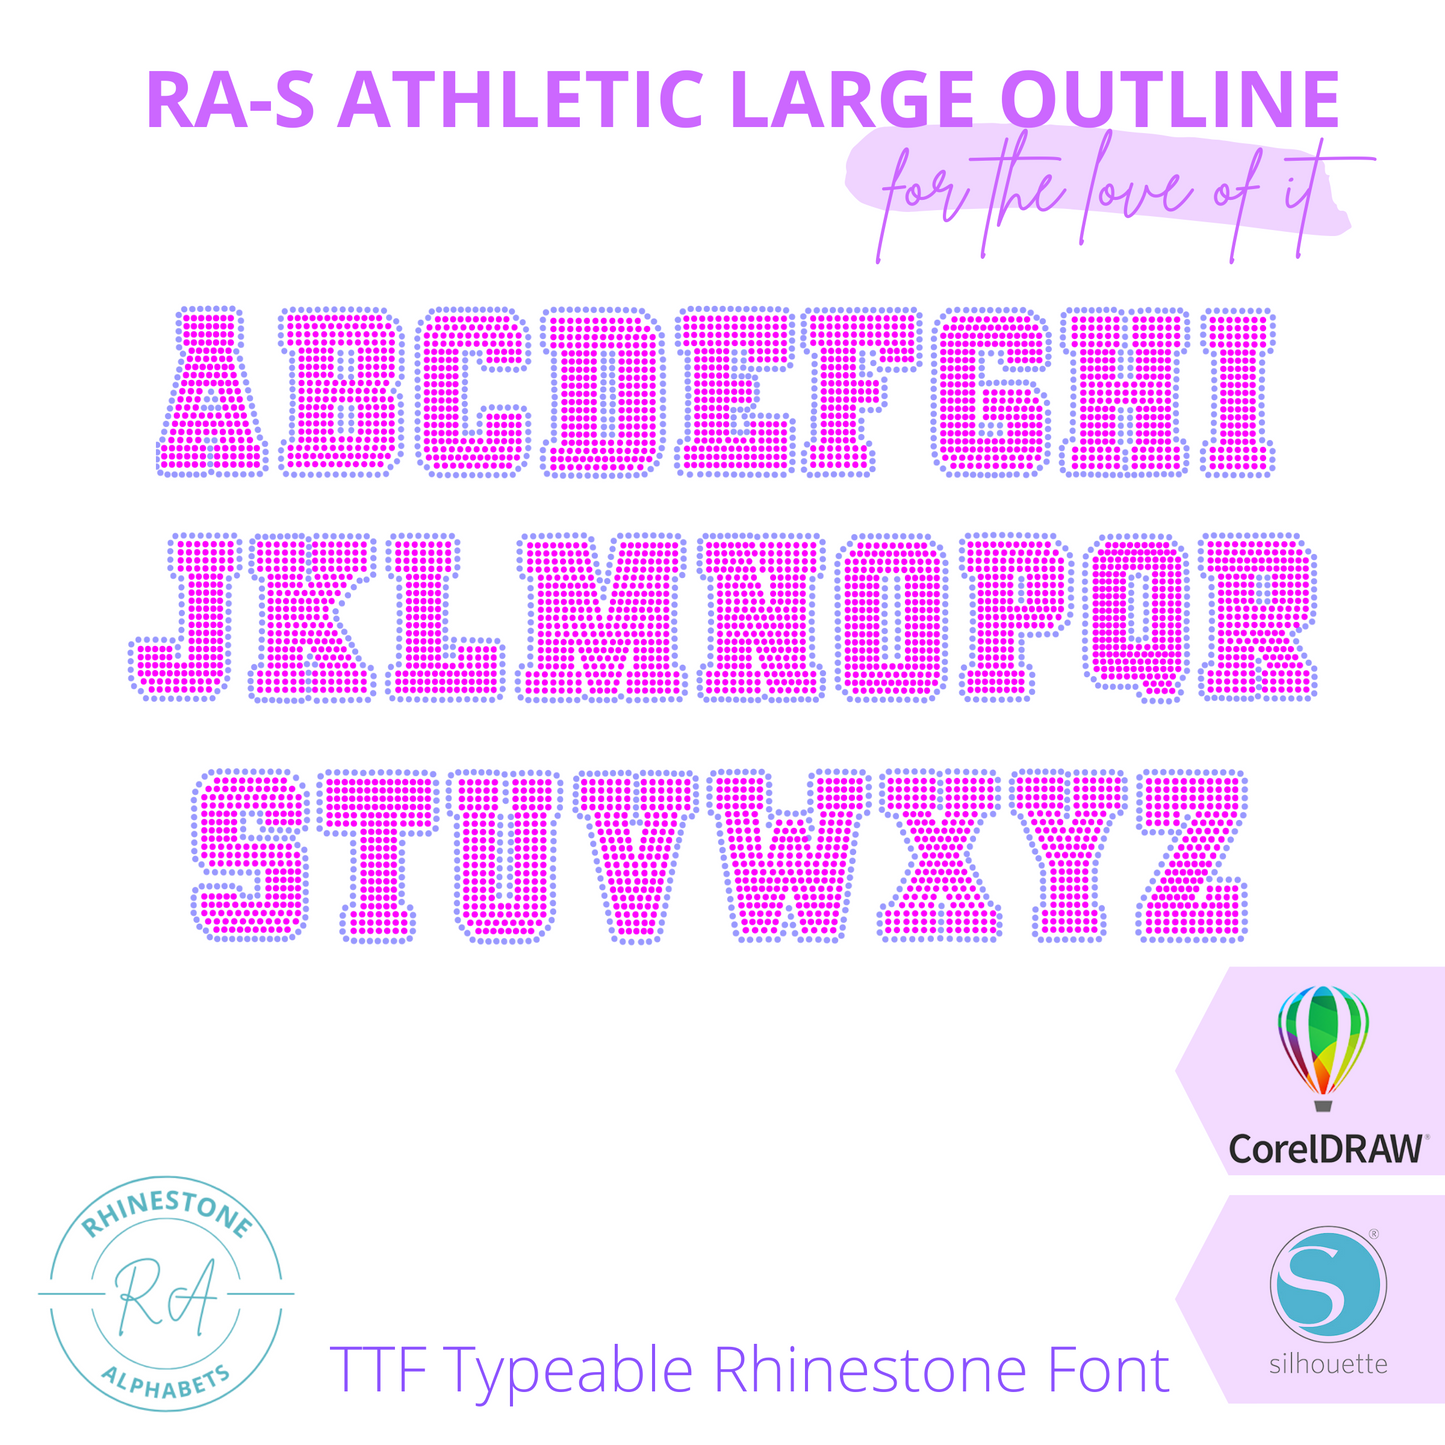 RA-S Athletic Large Outline - RhinestoneAlphabets